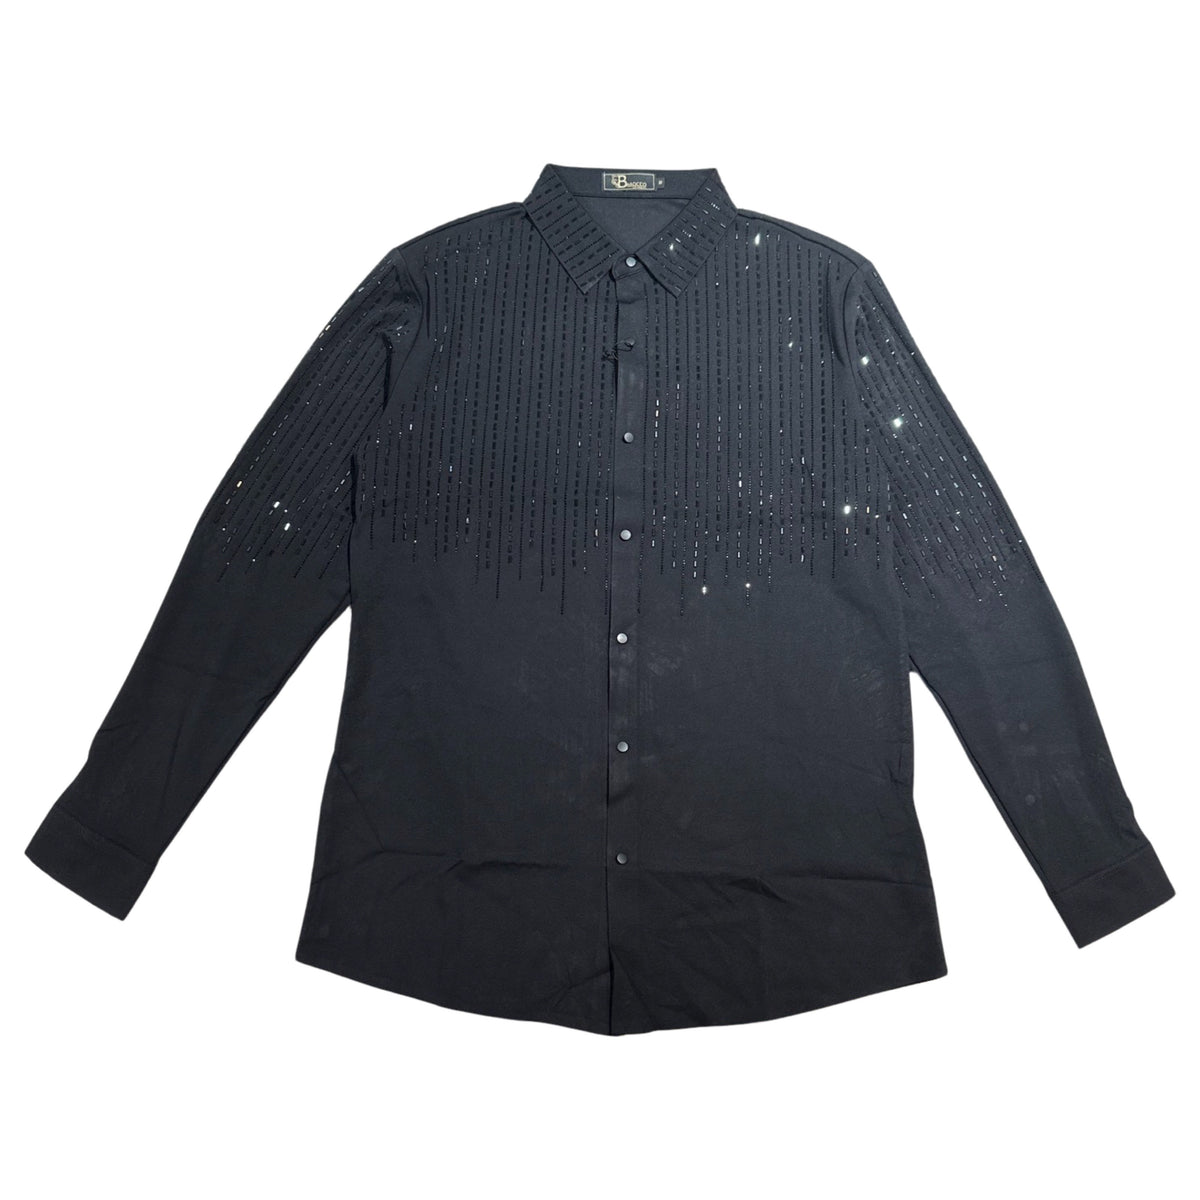 Barocco Black/Black Crystal Rain Button Up Shirt